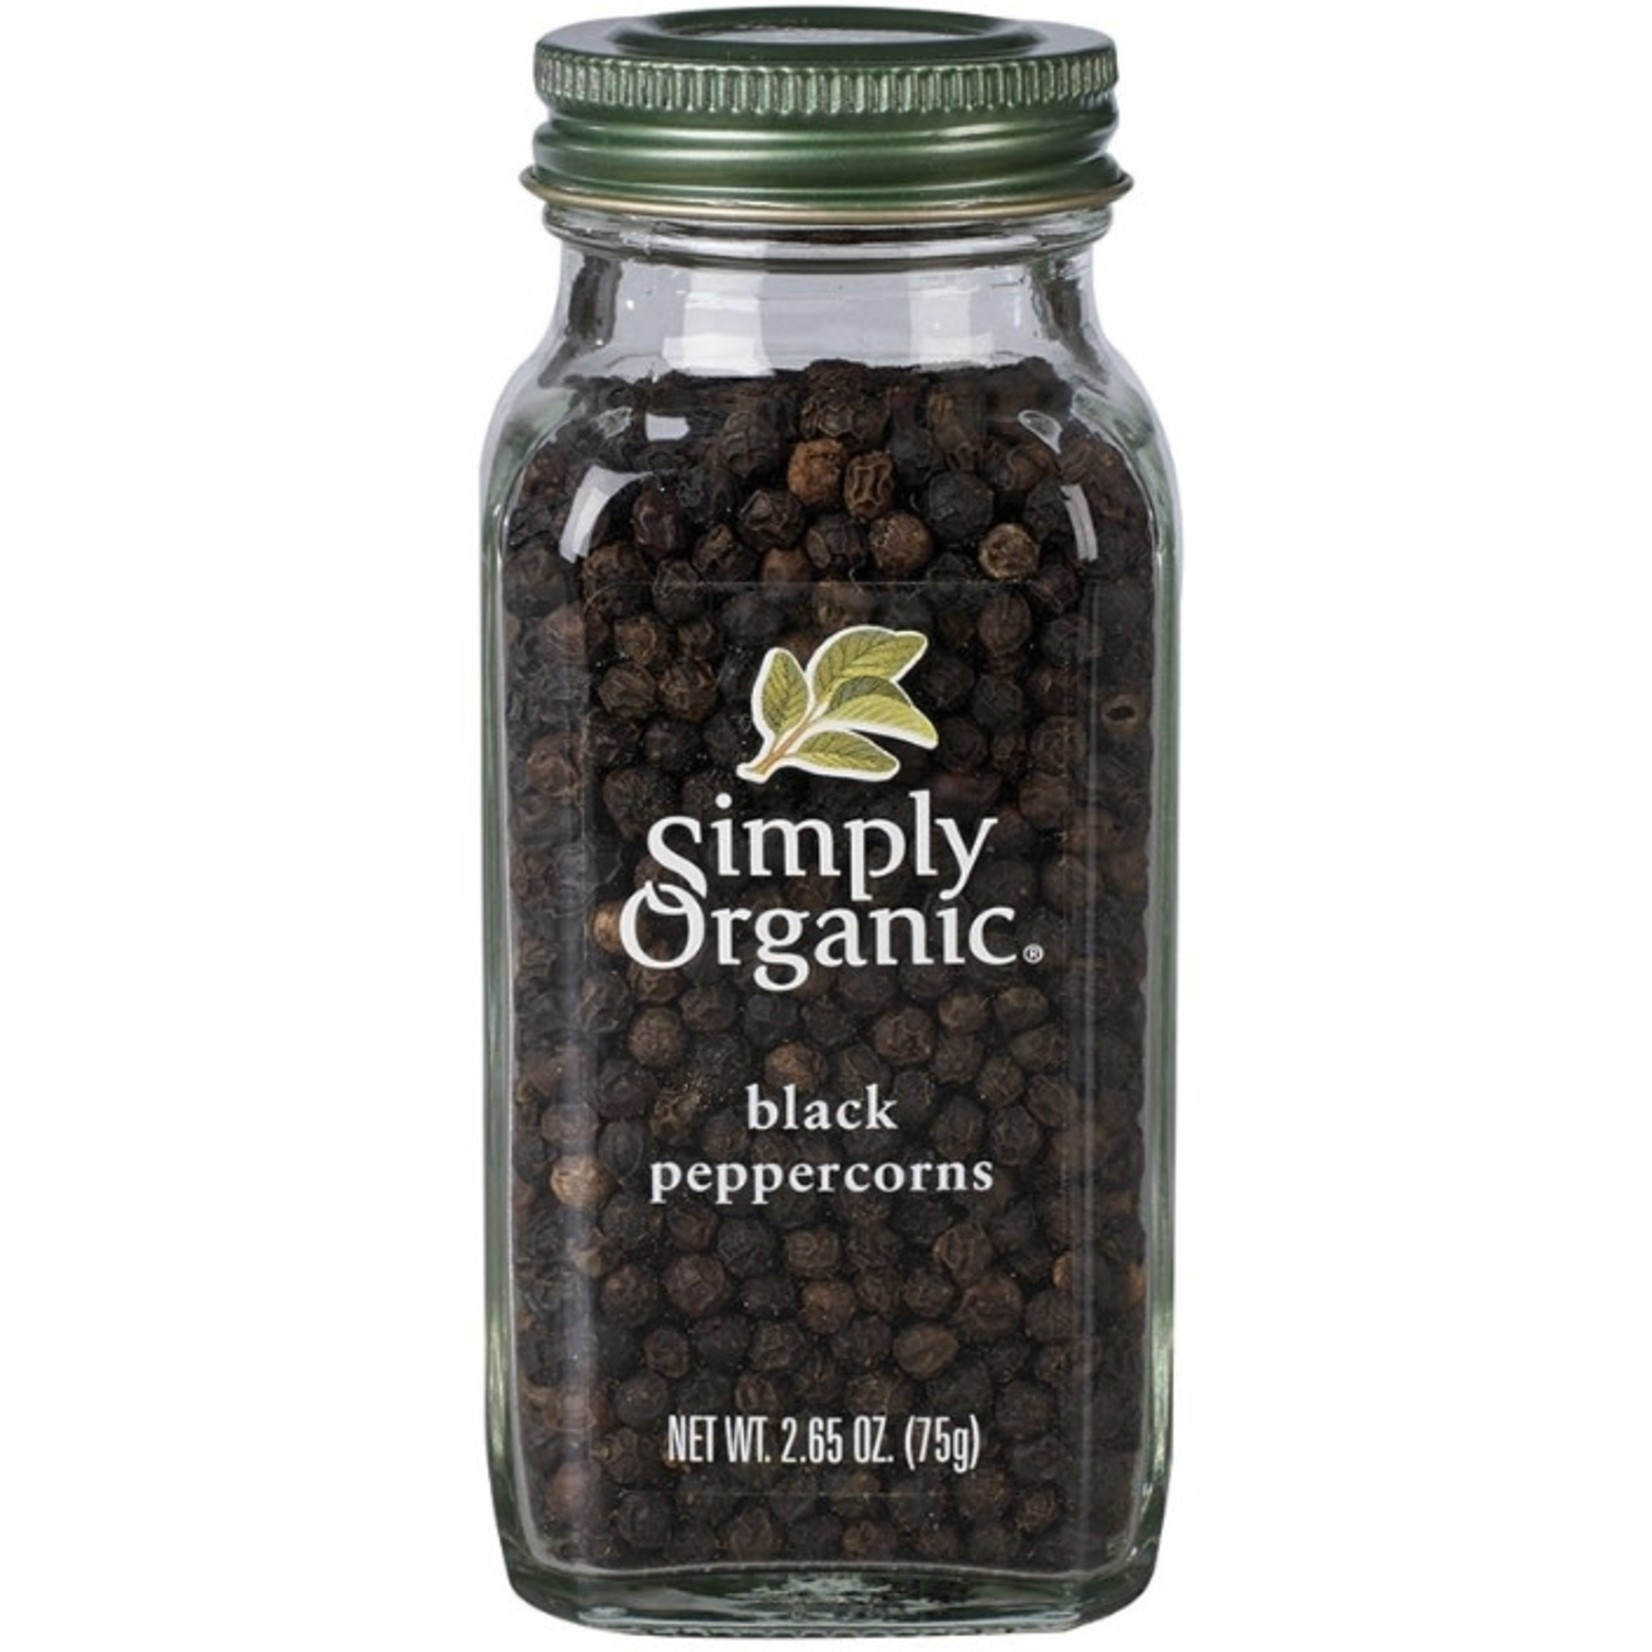 Simply Organic Simply Organic Black Peppercorn 75g